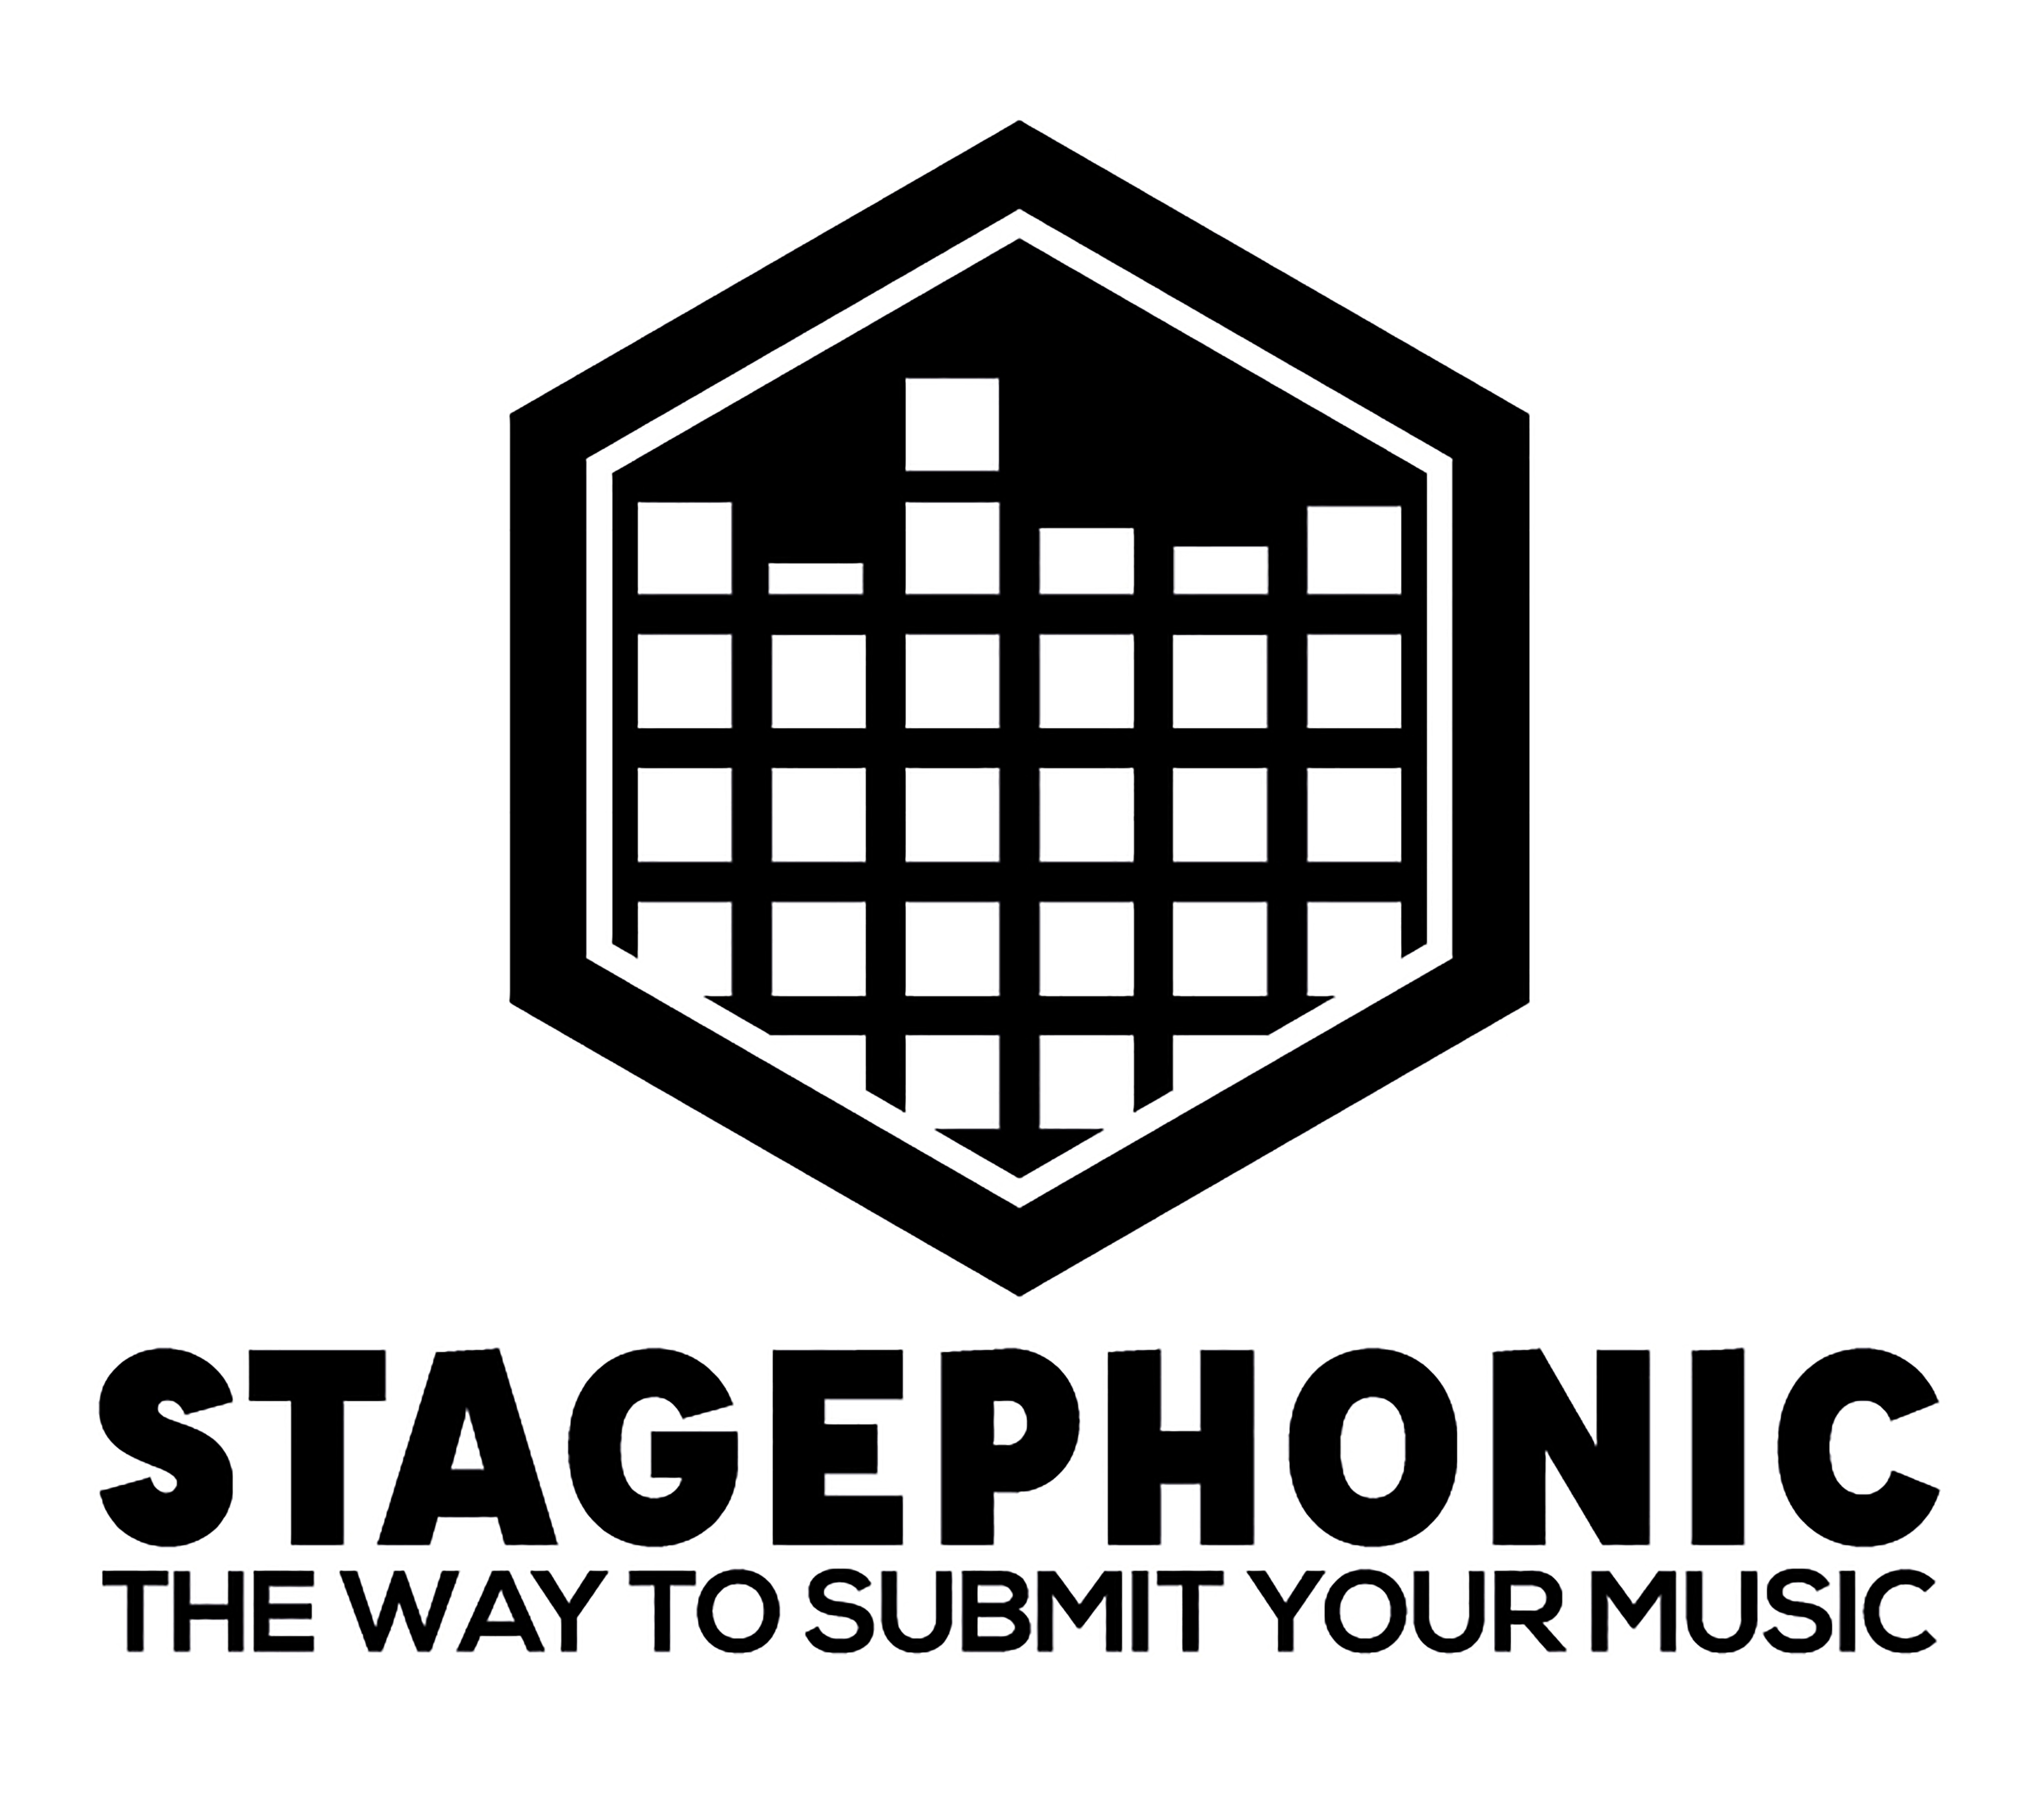 www.stagephonic.com